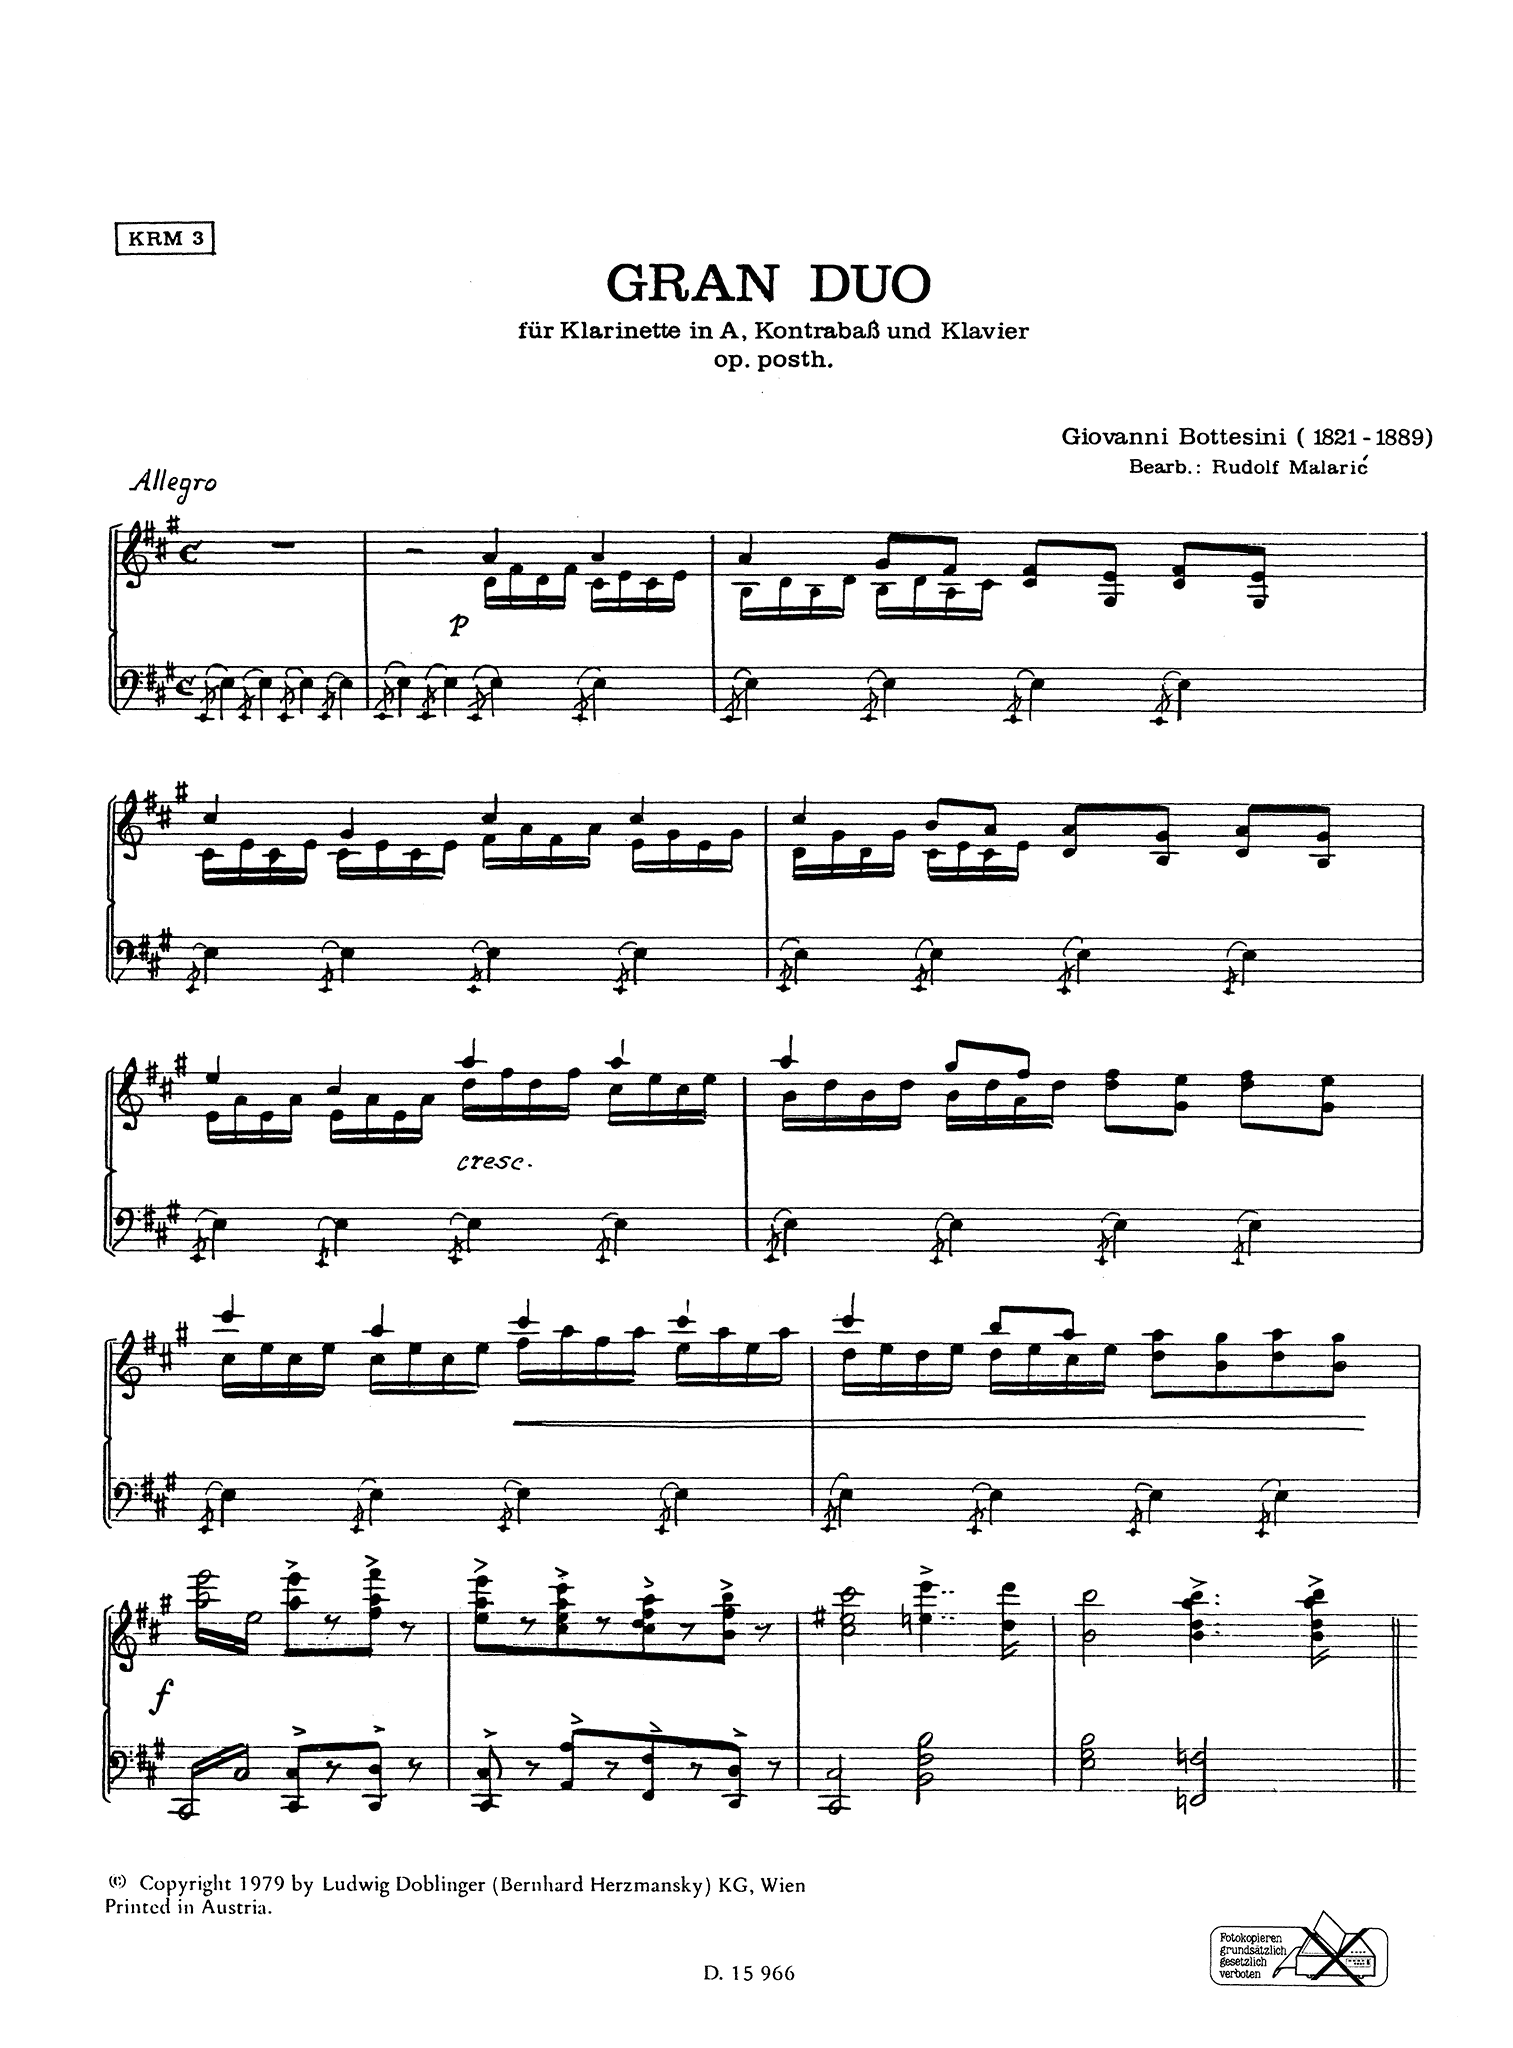 Giovanni Bottesini Duet Clarinet and Double Bass score